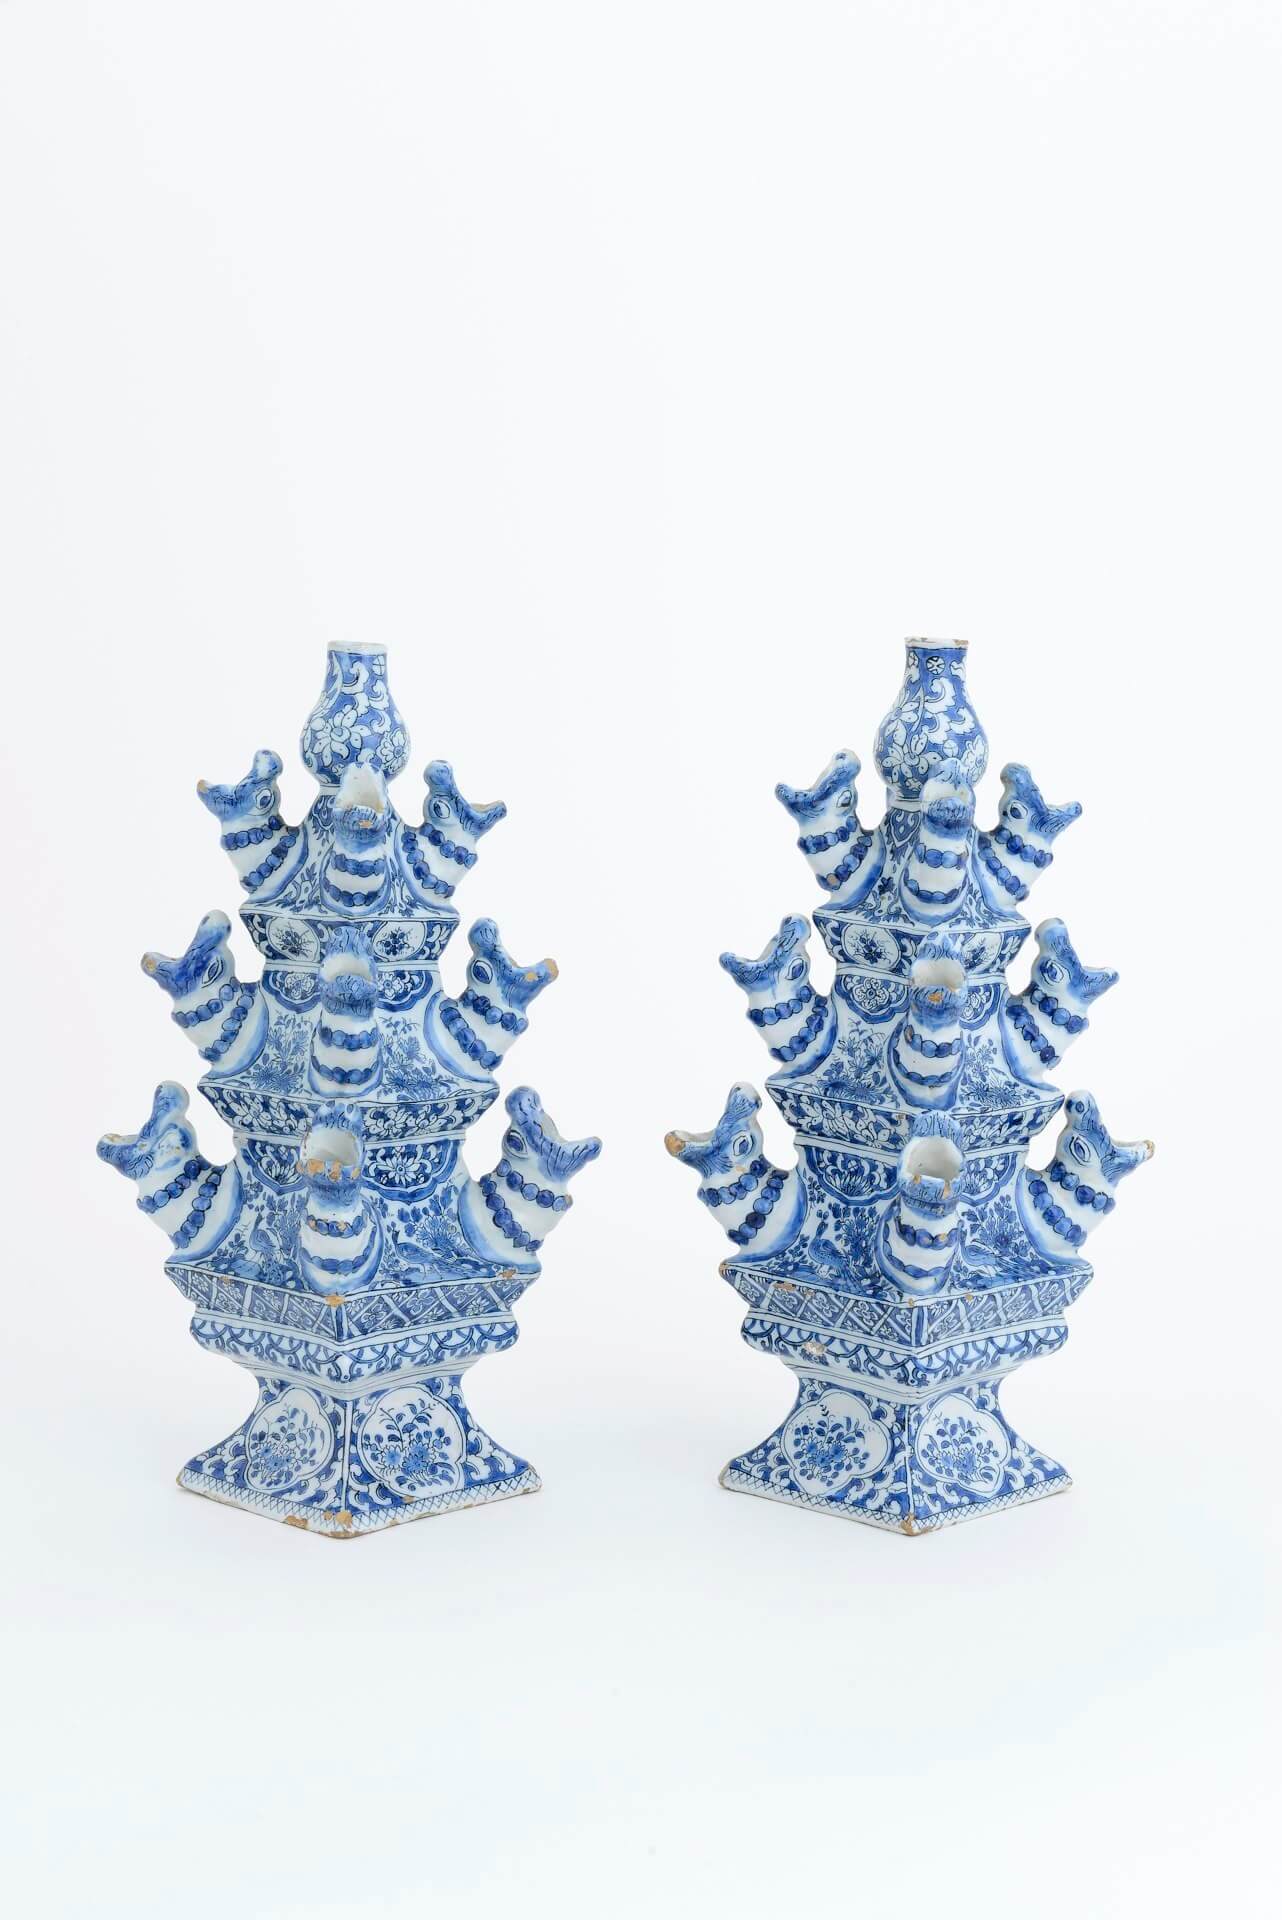 • D1321. Pair of Blue and White Pyramidal Flower Vases